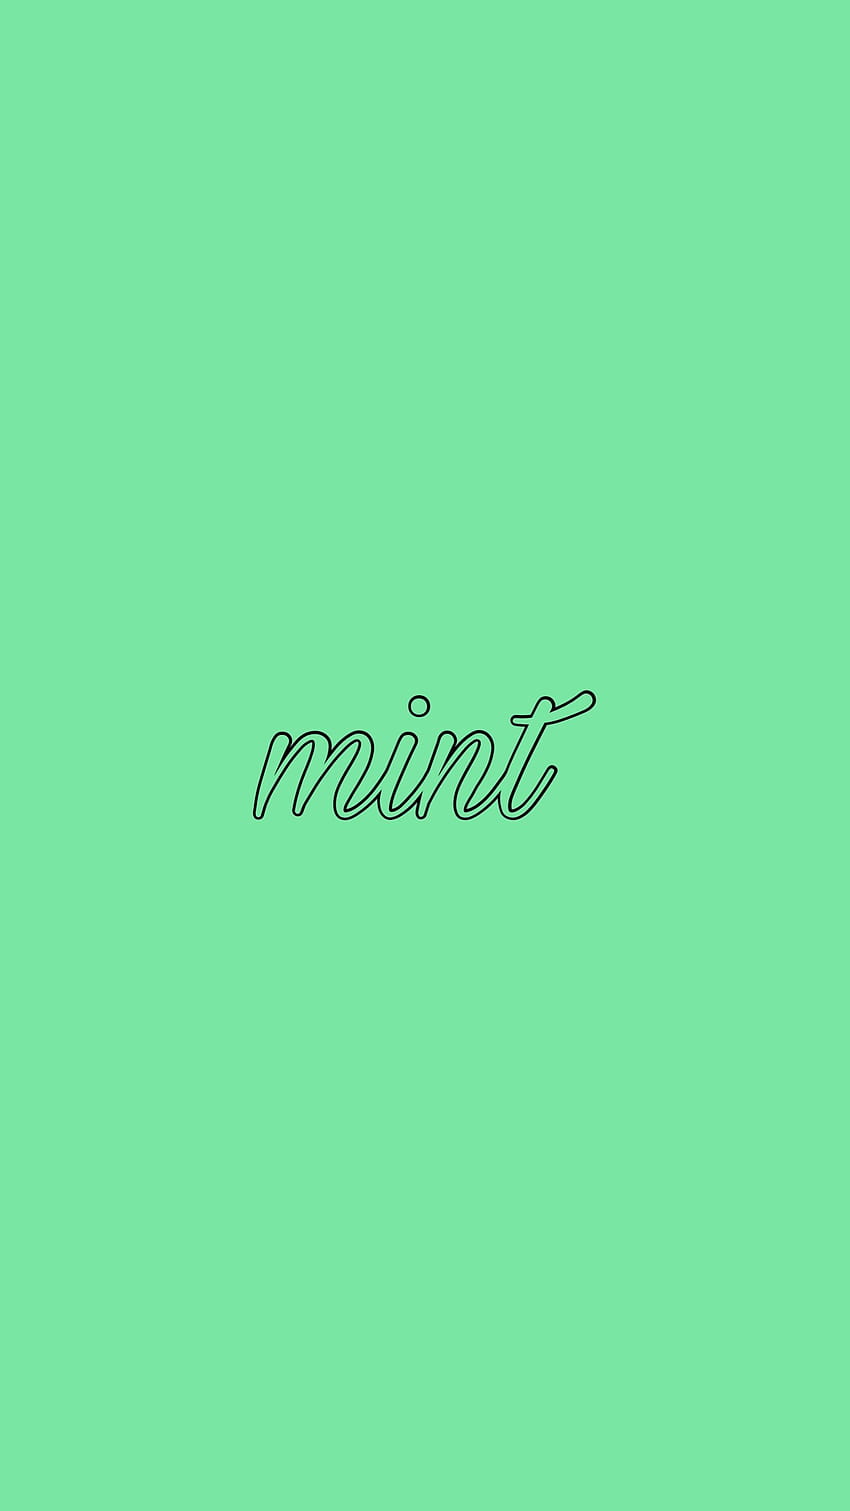 A mint logo on green background - Mint green